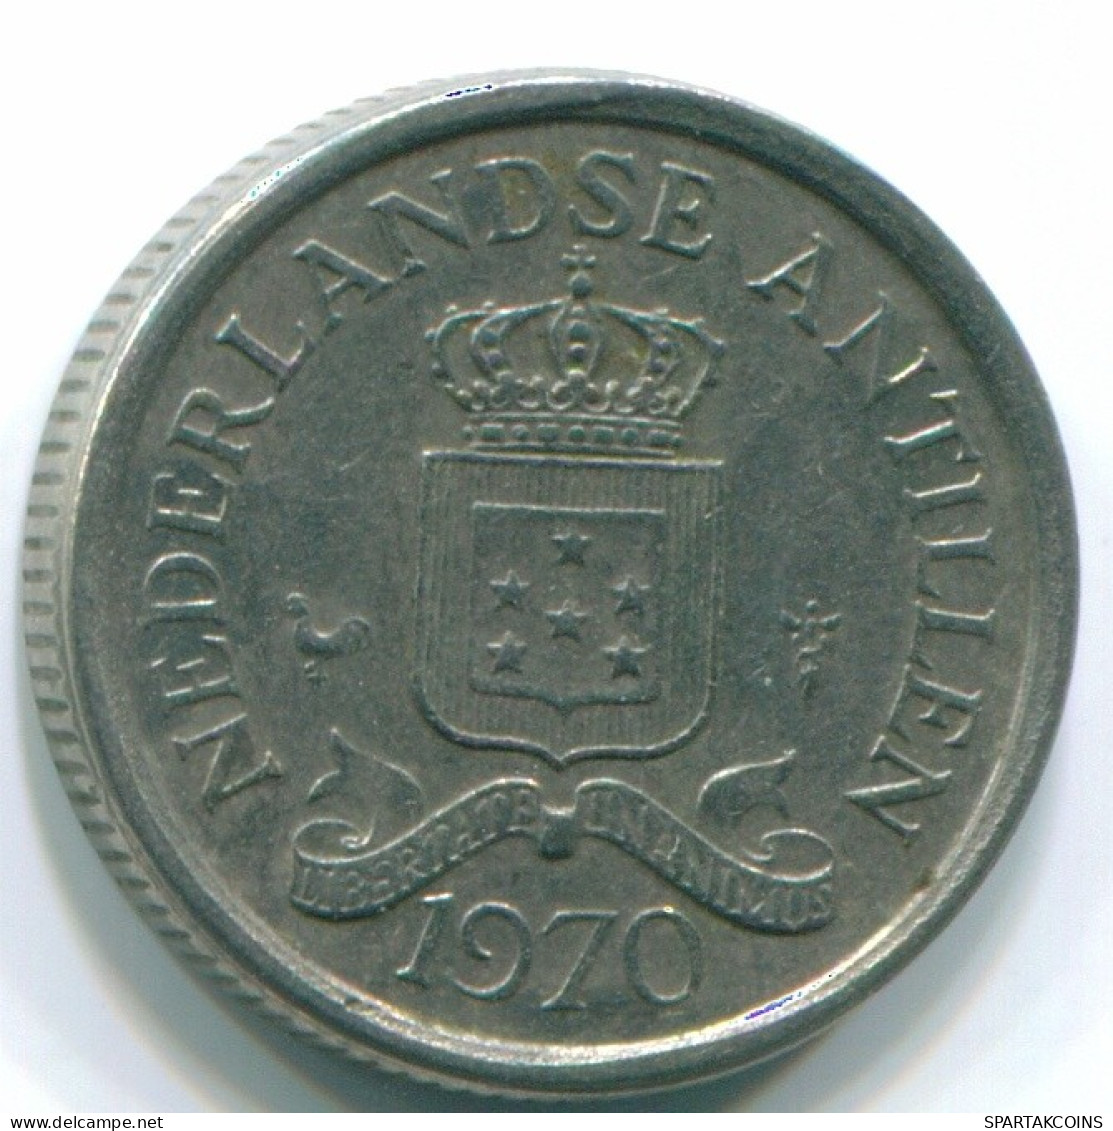 10 CENTS 1970 NIEDERLÄNDISCHE ANTILLEN Nickel Koloniale Münze #S13350.D.A - Netherlands Antilles